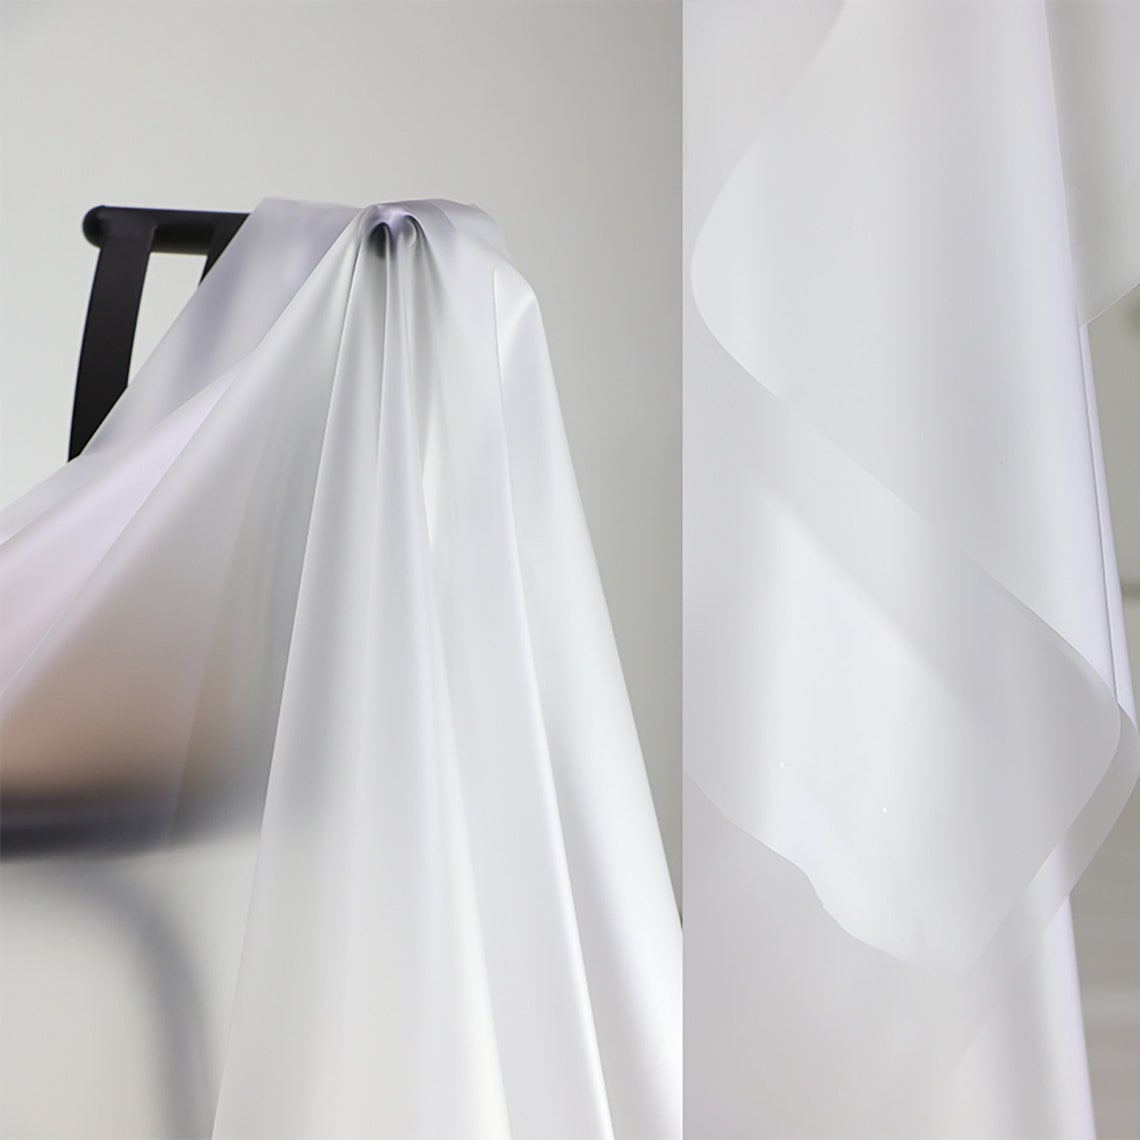 TPU White fabrics Translucent frosted fabric Waterproof | Etsy